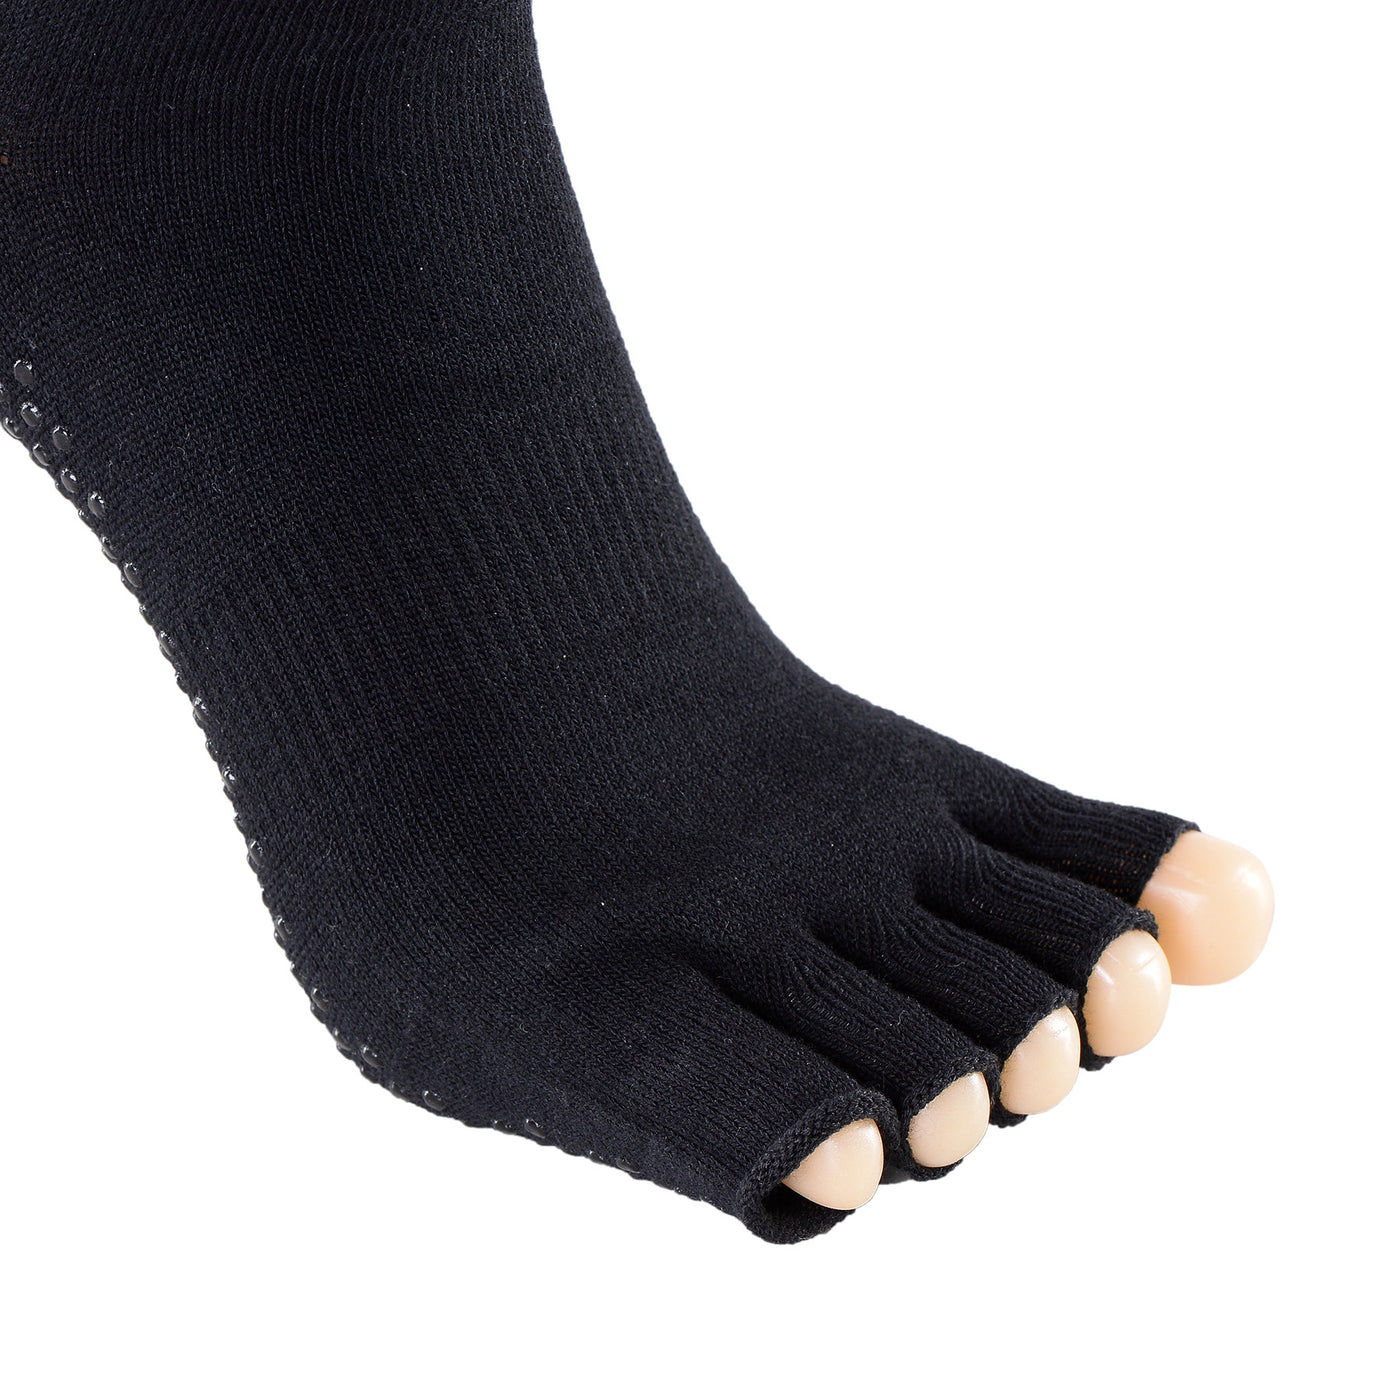 Laulax 2 Pairs Ladies High Quality Professional Anti Slip Half Toe Yoga Socks, Black, Size UK 3 - 8 / Europe 36 - 41